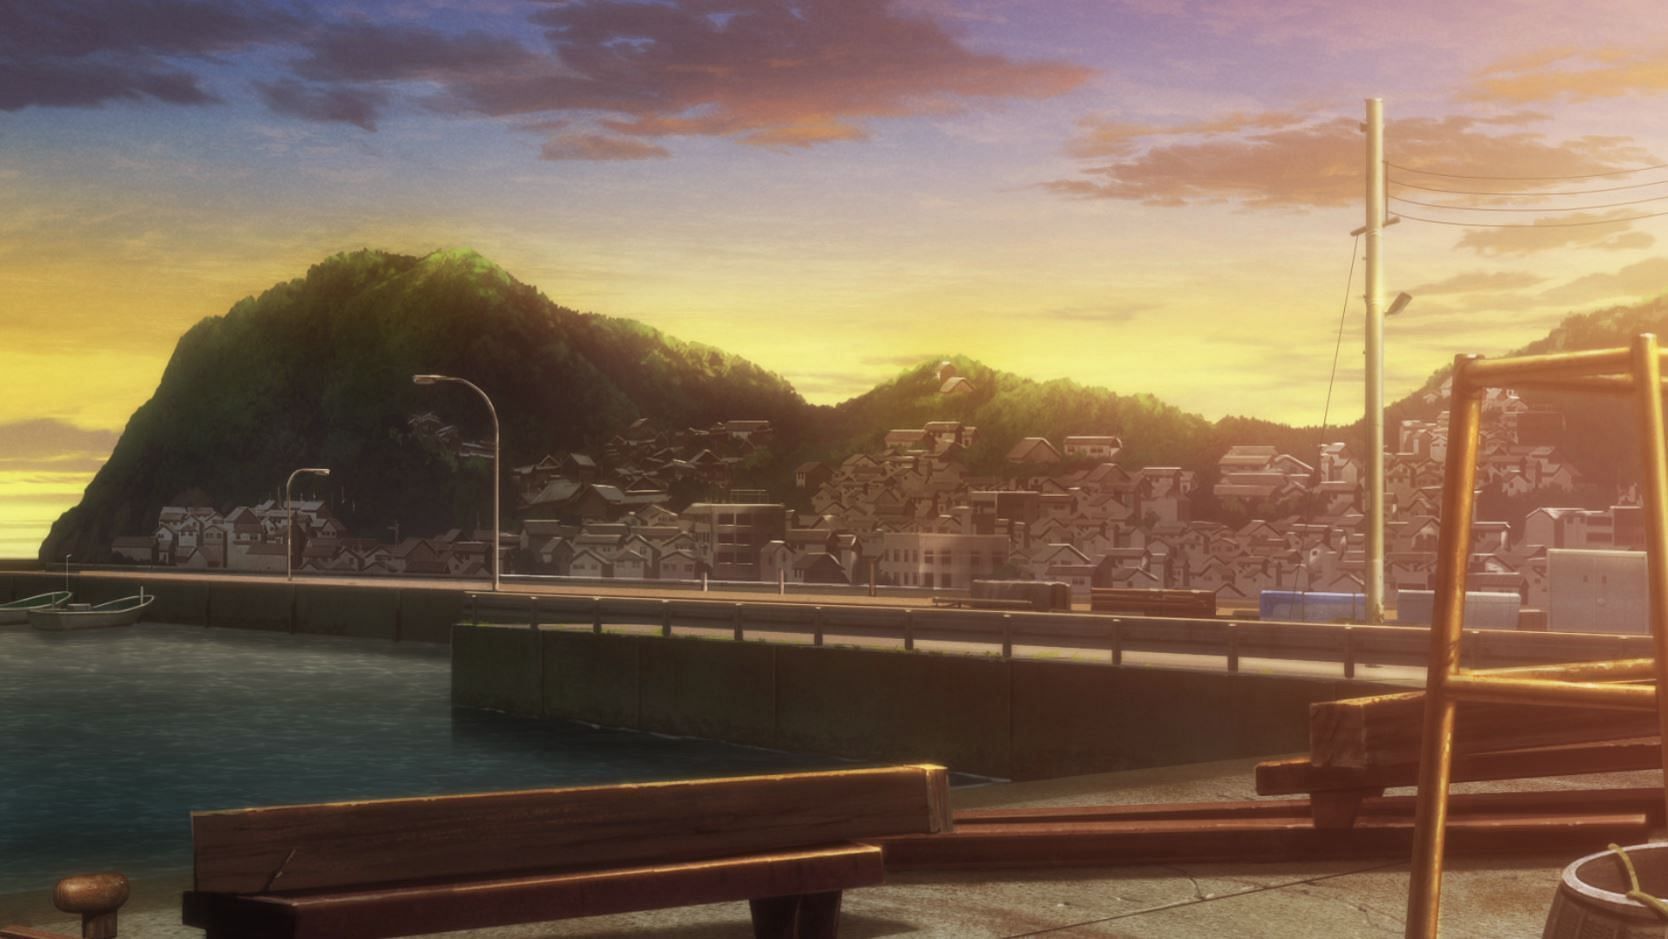 Summertime Rendering Episode 25: Shinpei and Ushio reunite